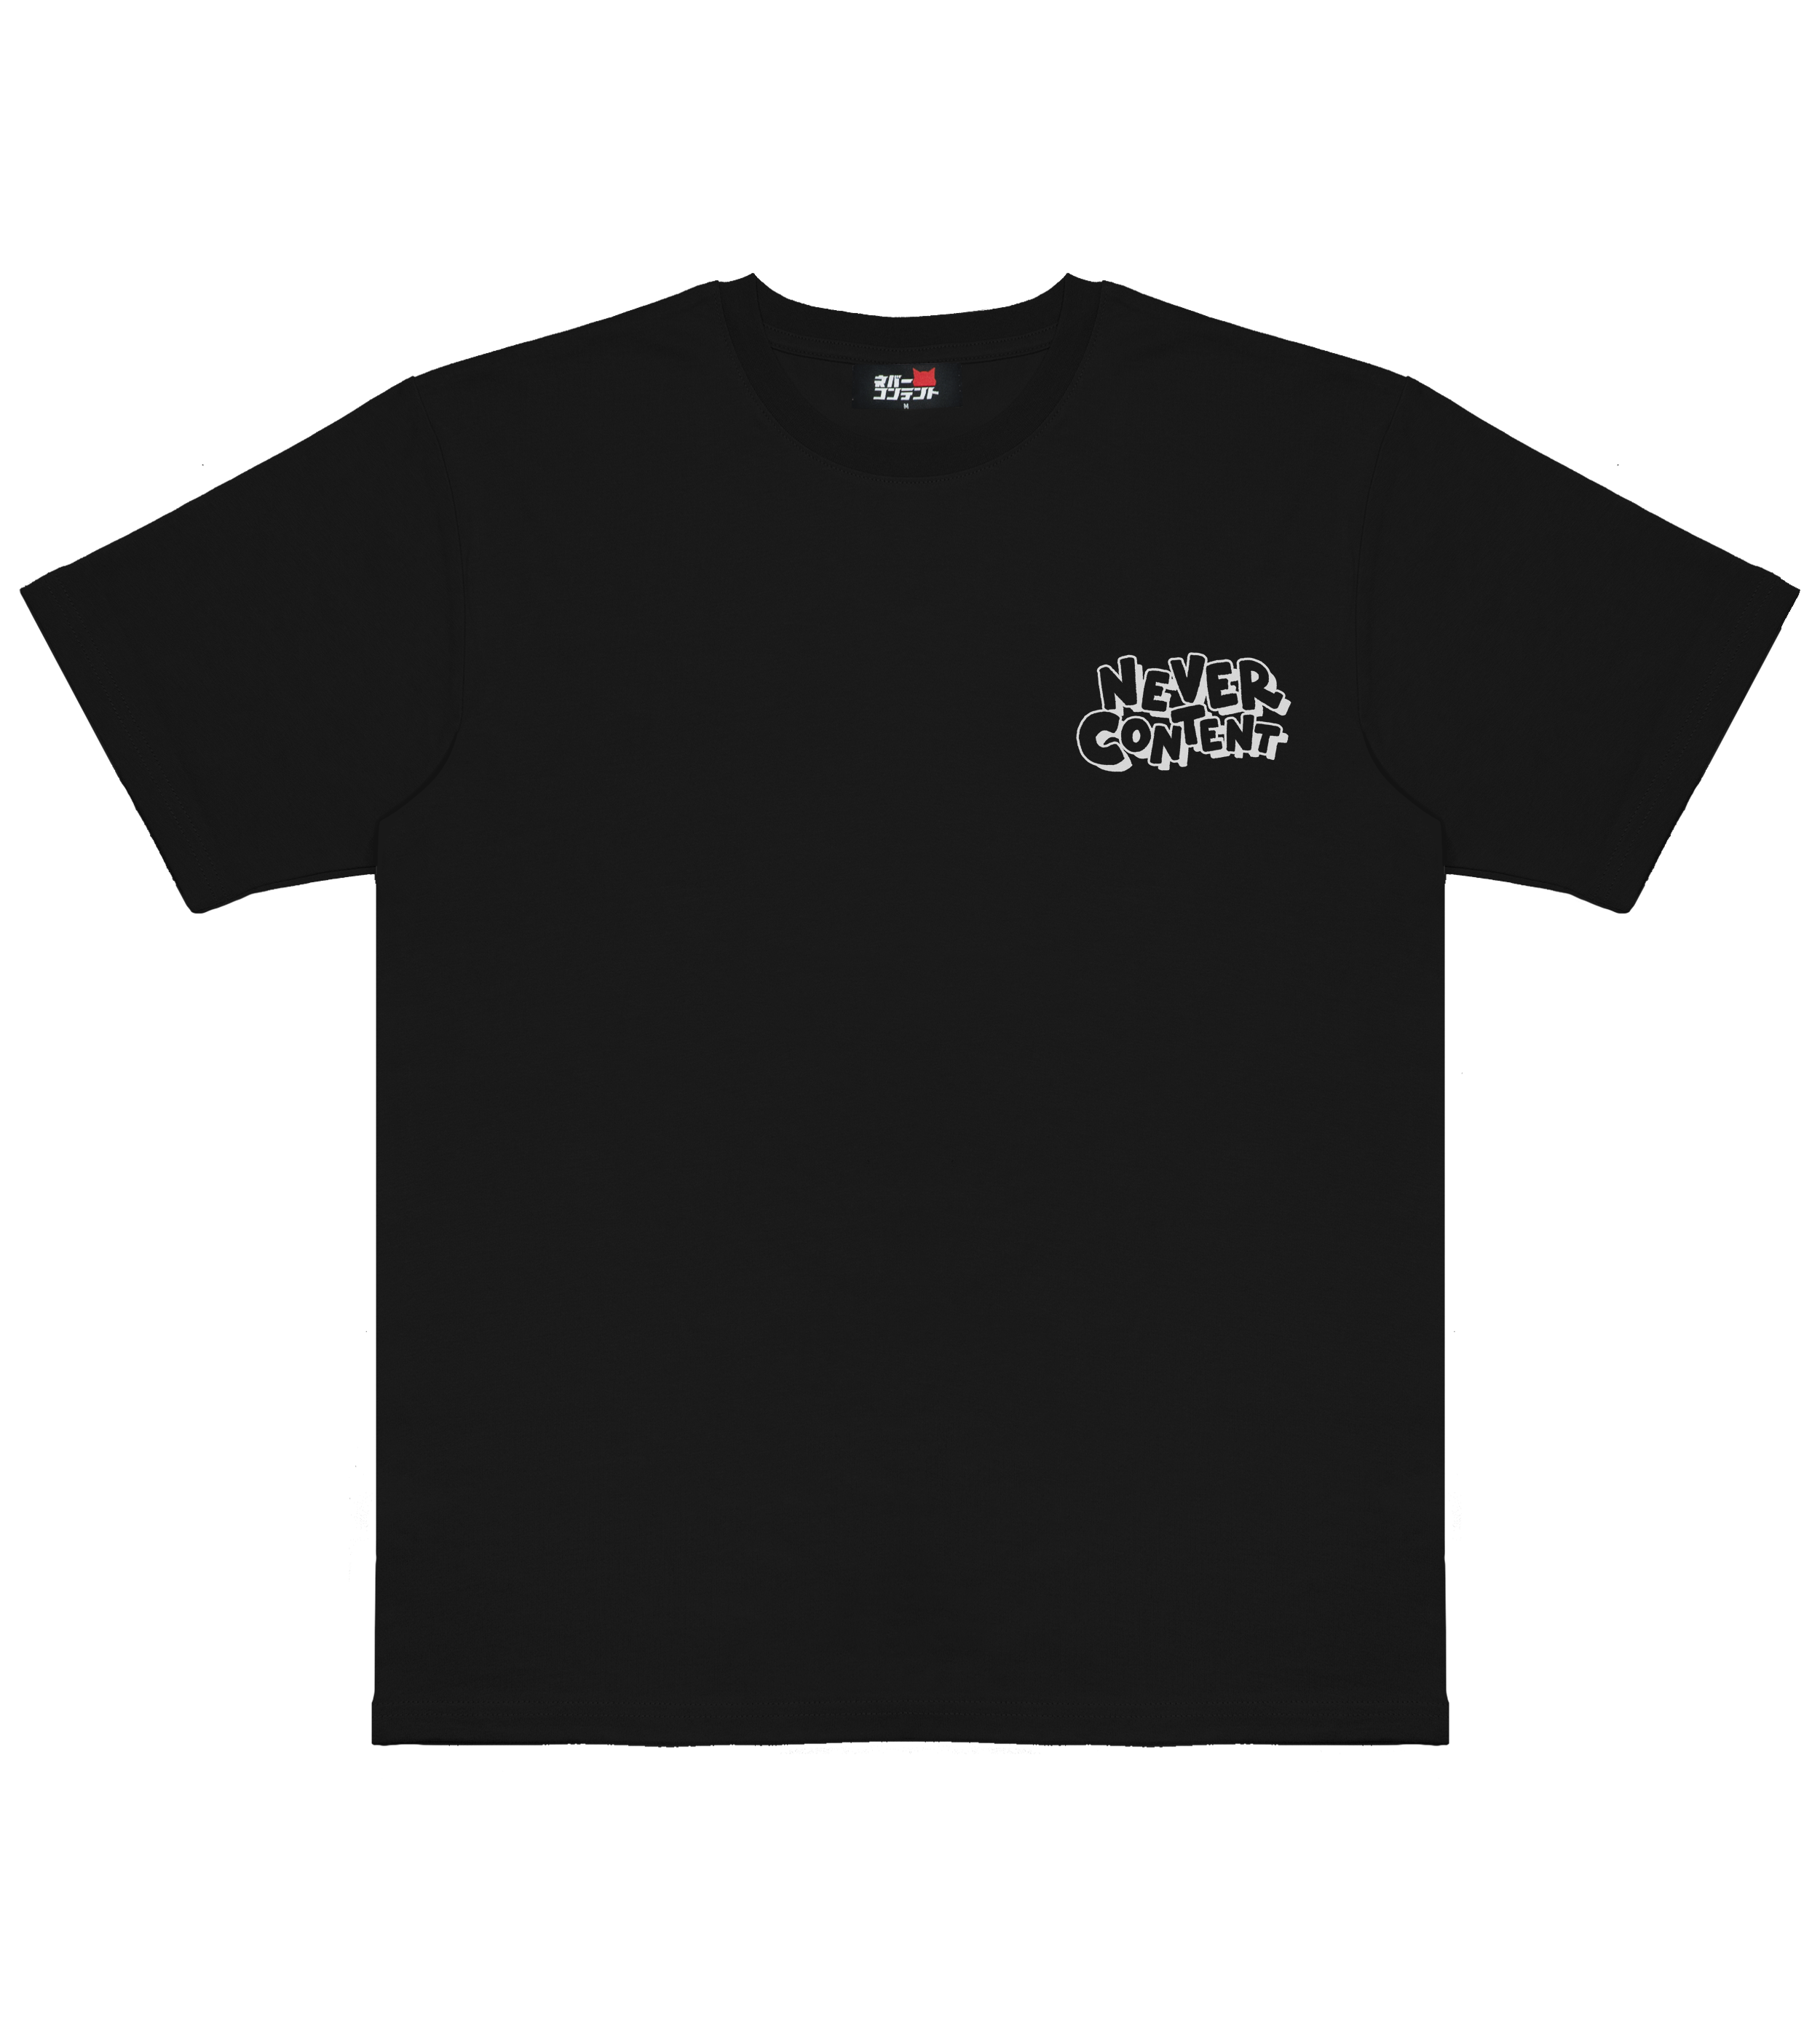 180 STYLE - Black Shirt